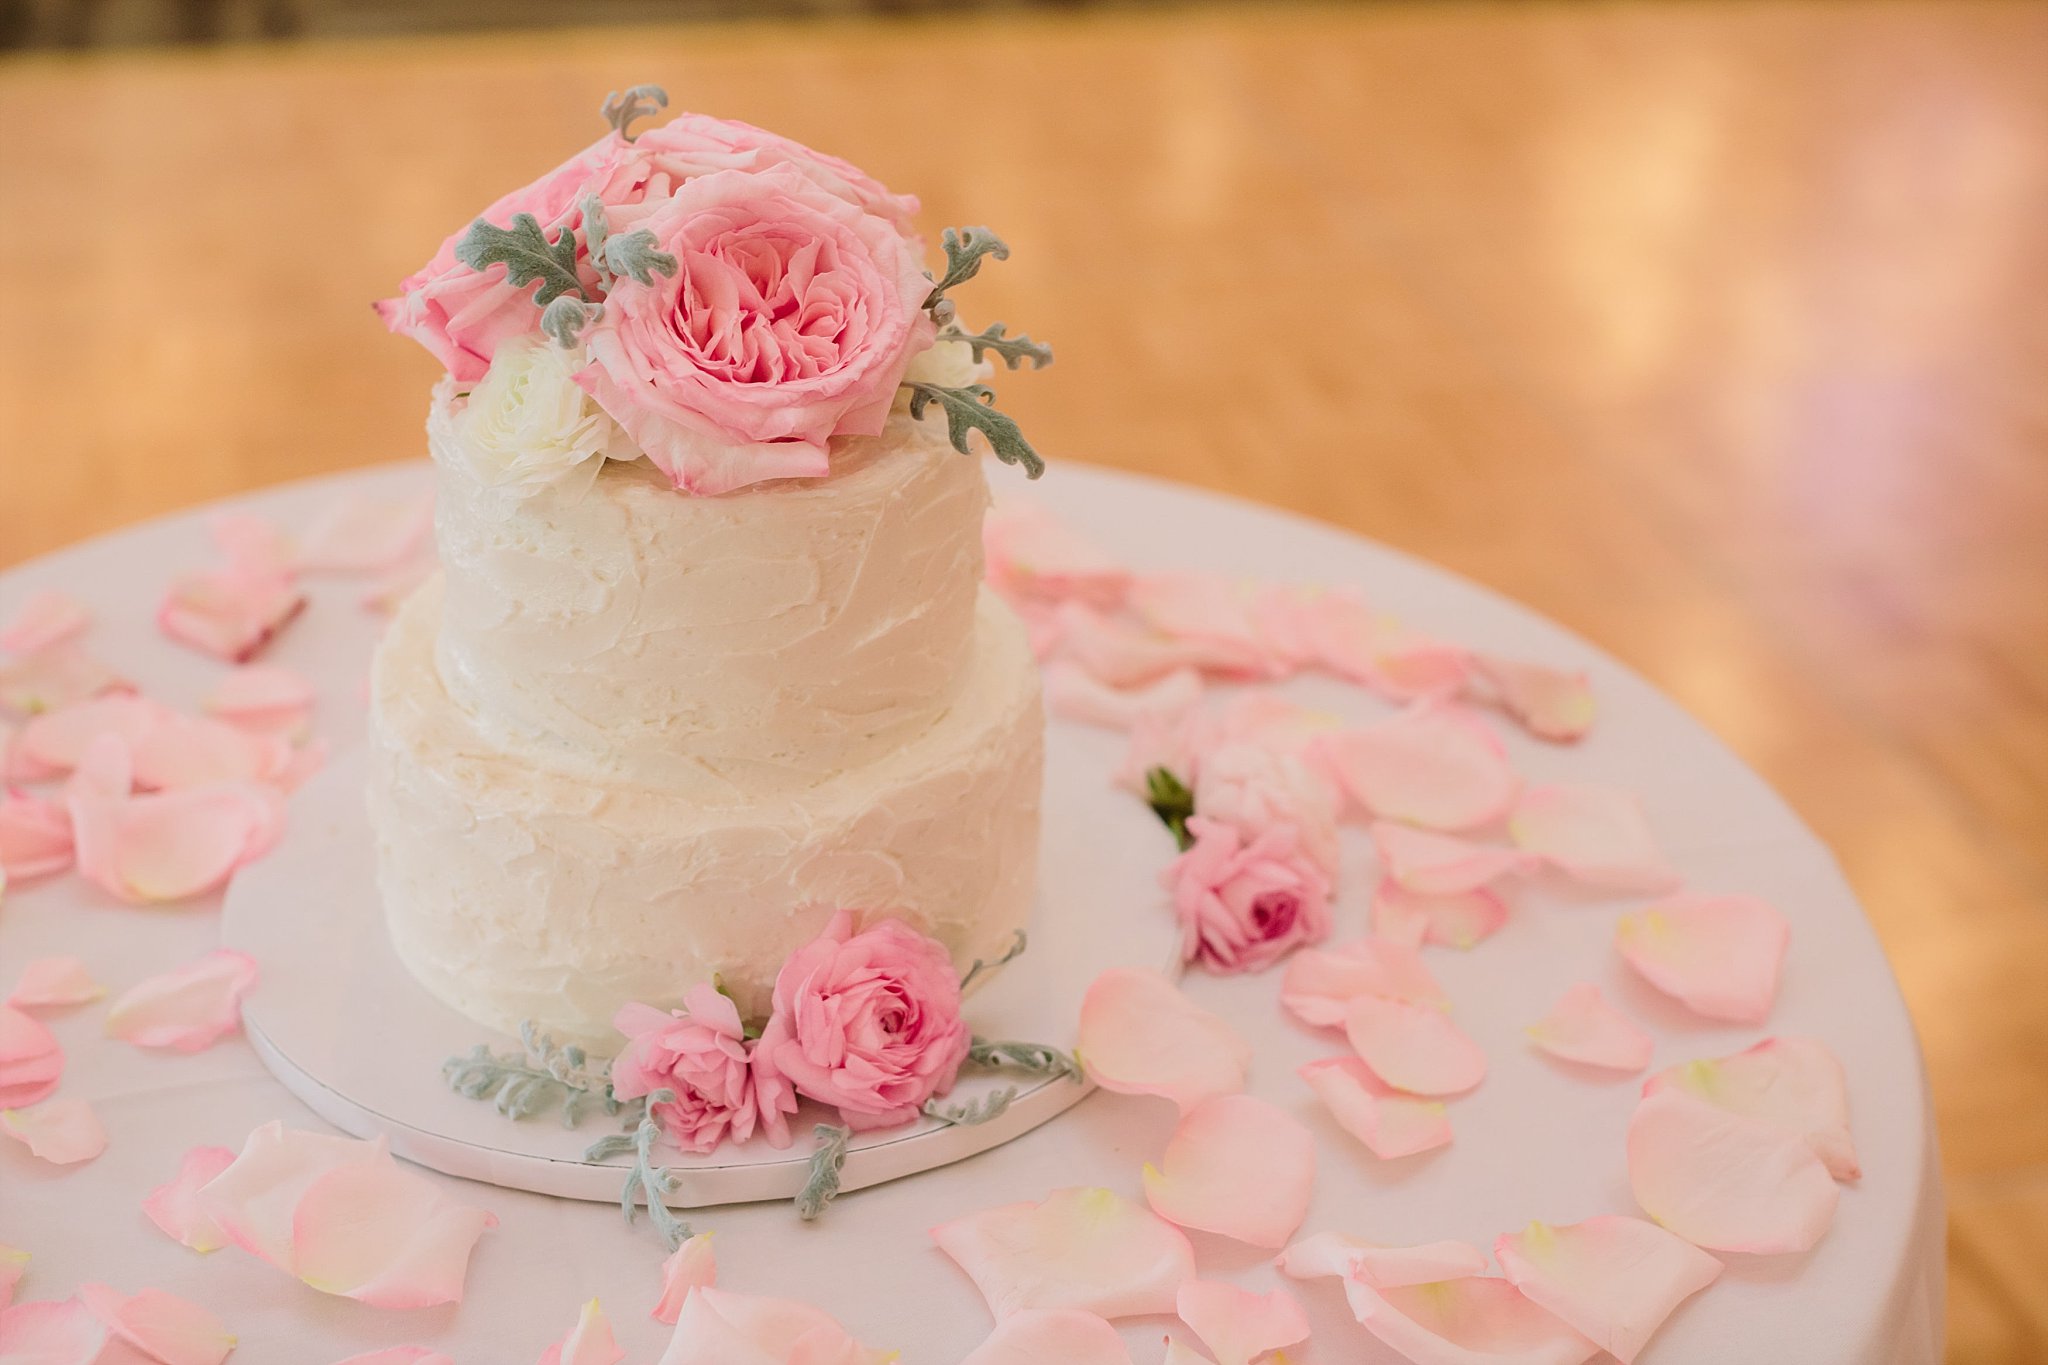 White wedding cake + fresh flowers